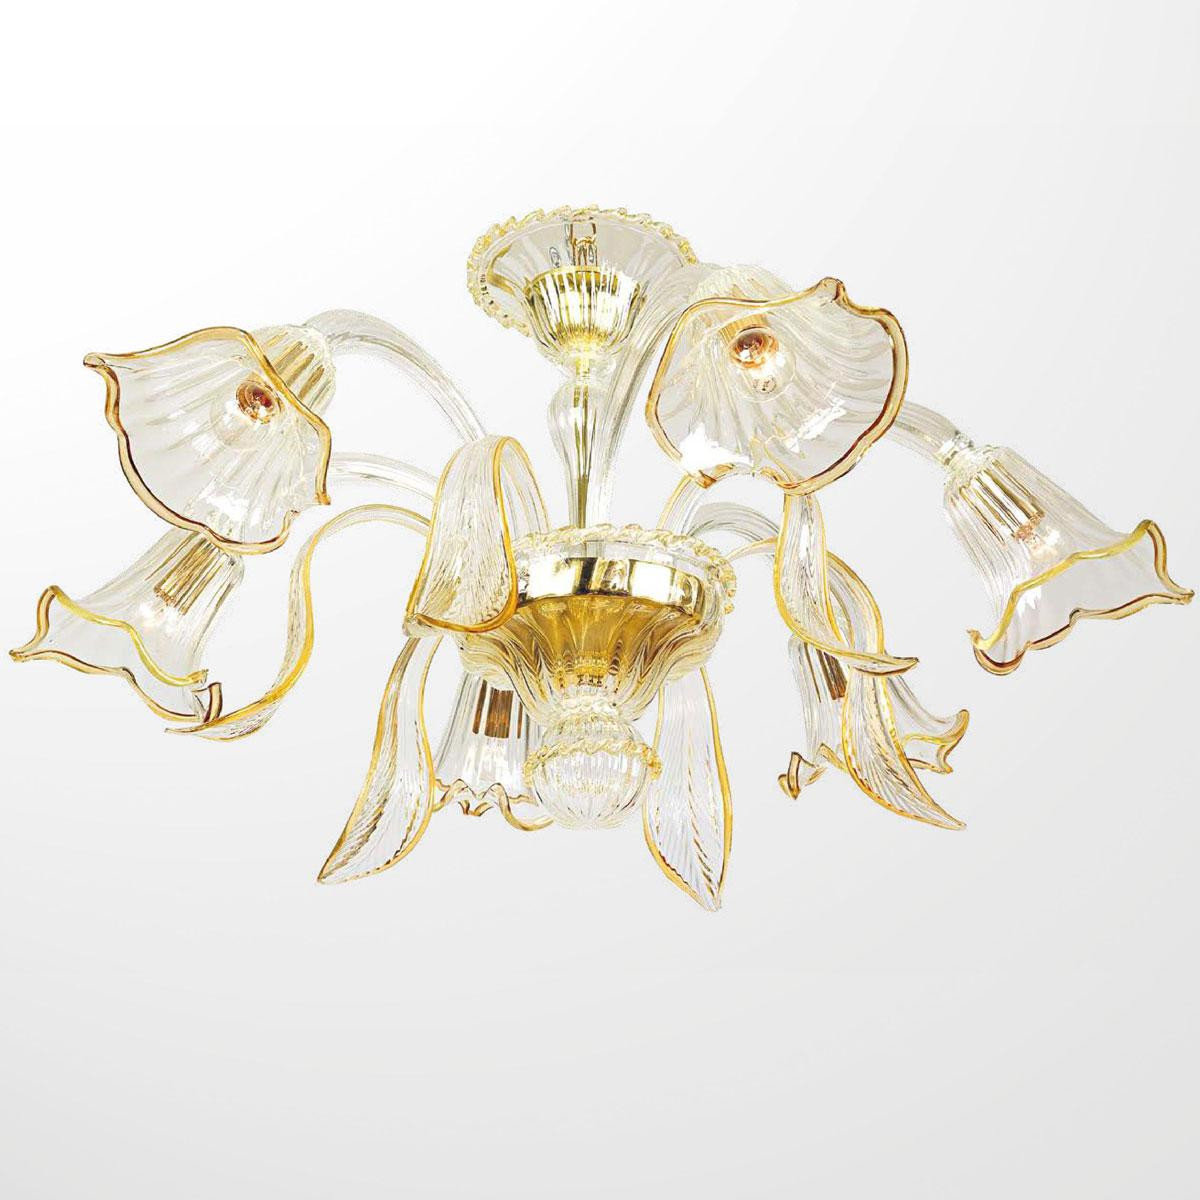 "Annika" Murano glass chandelier - 6 lights - transparent and amber